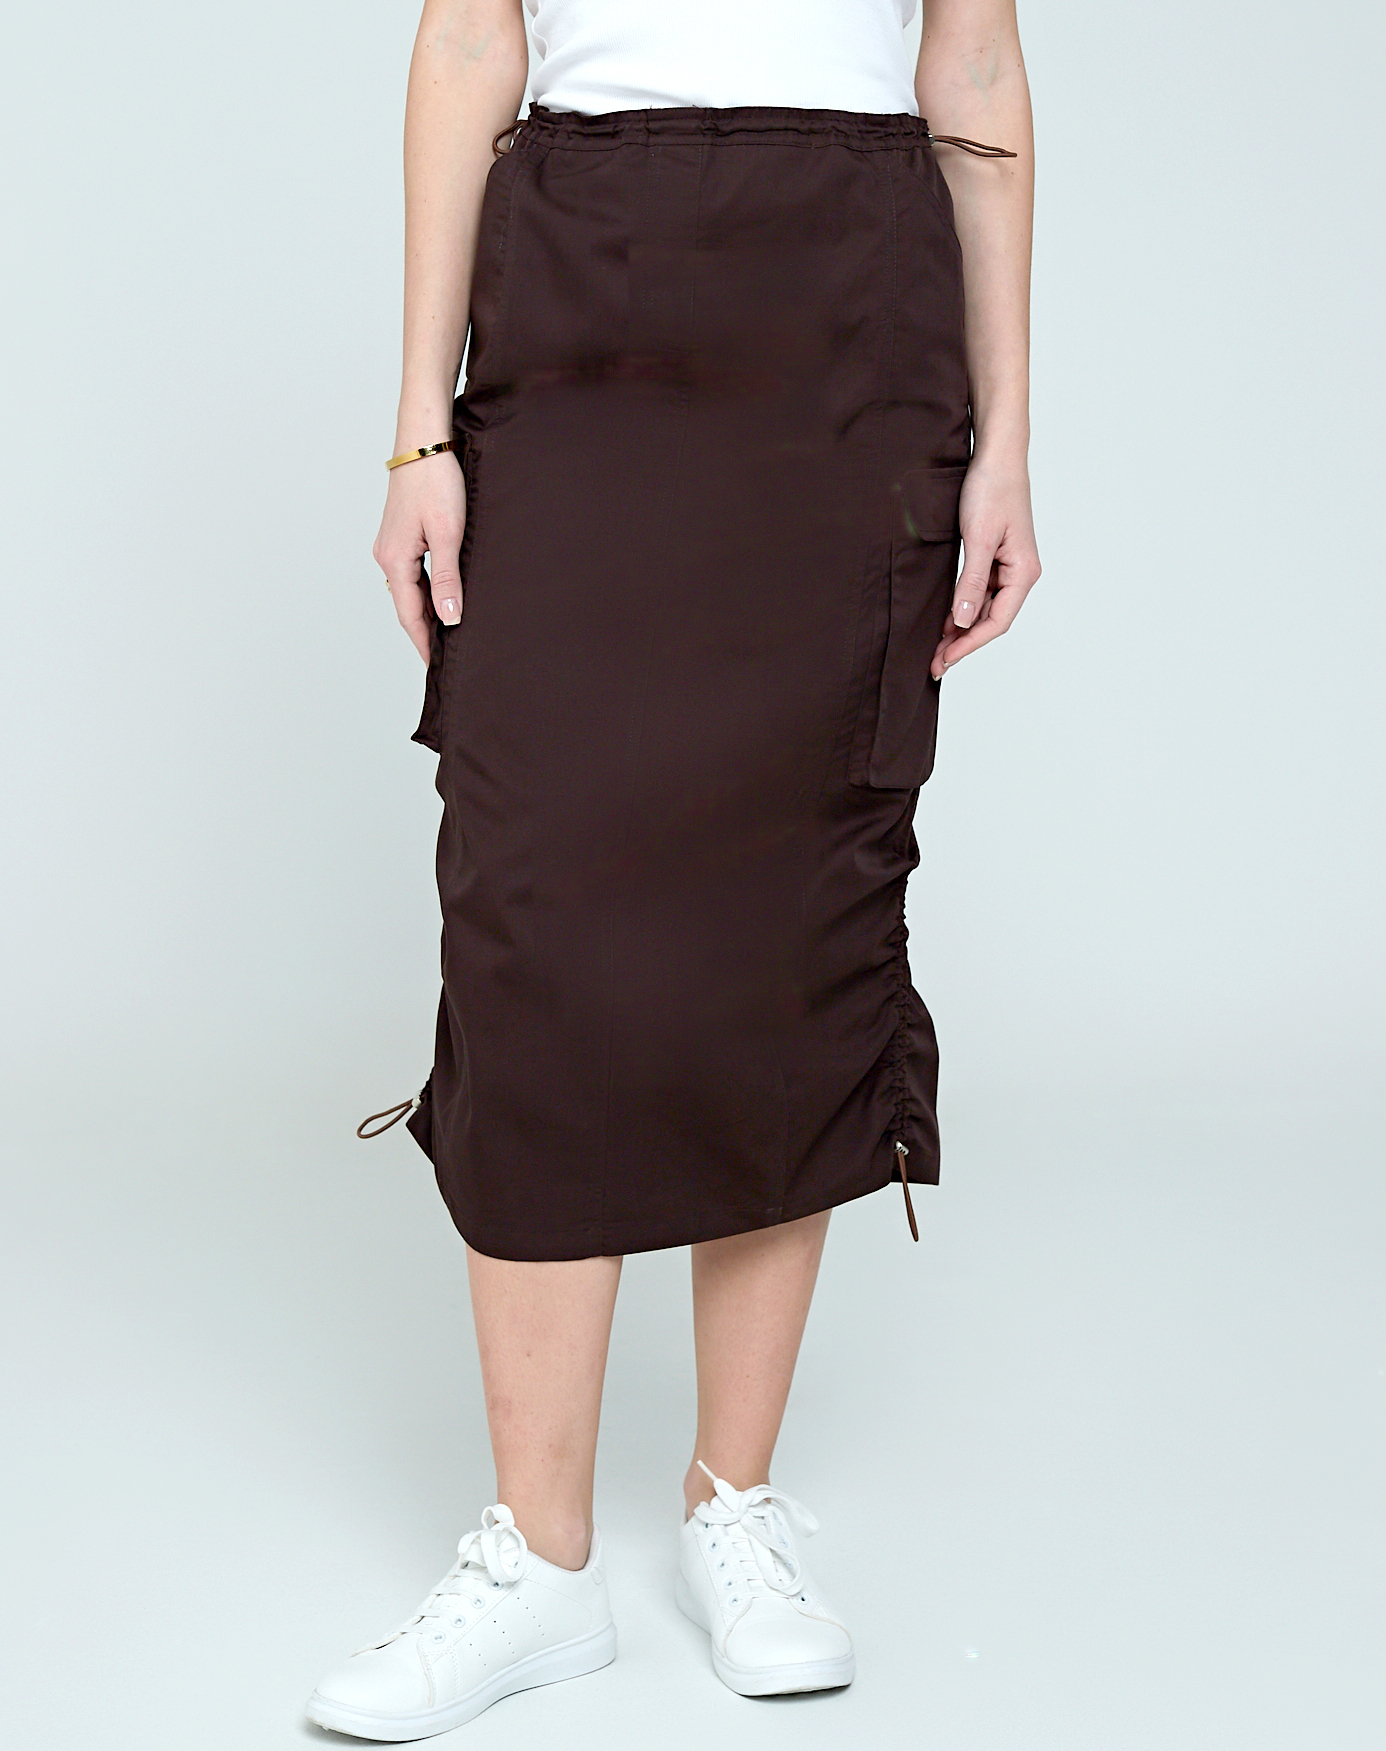 Юбка женская IRINA EGOROVA Cargo Skirt коричневая 44 RU